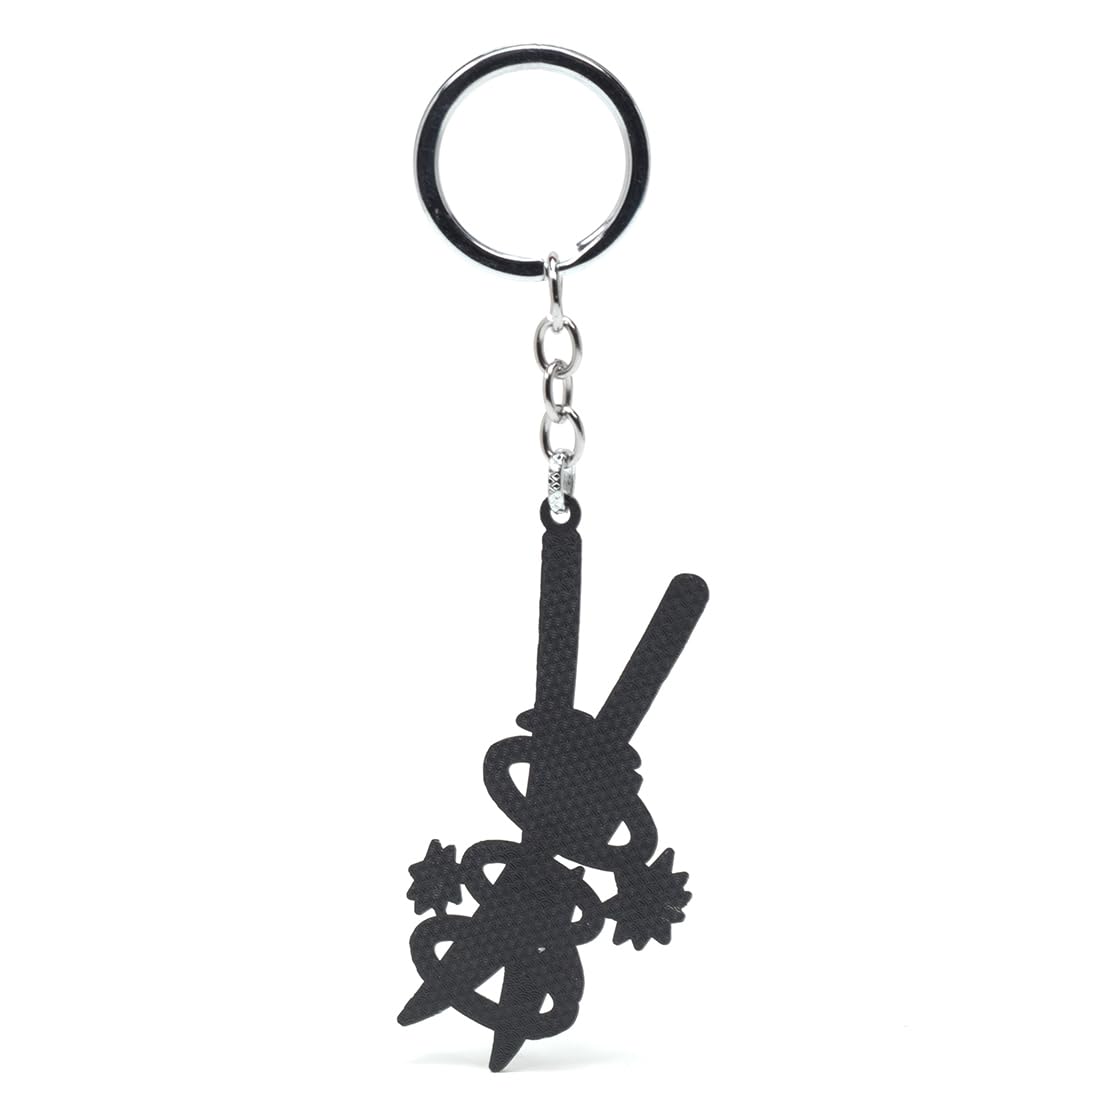 Tengen Katana Metal Keychain | Demon Slayer Collectible Accessories